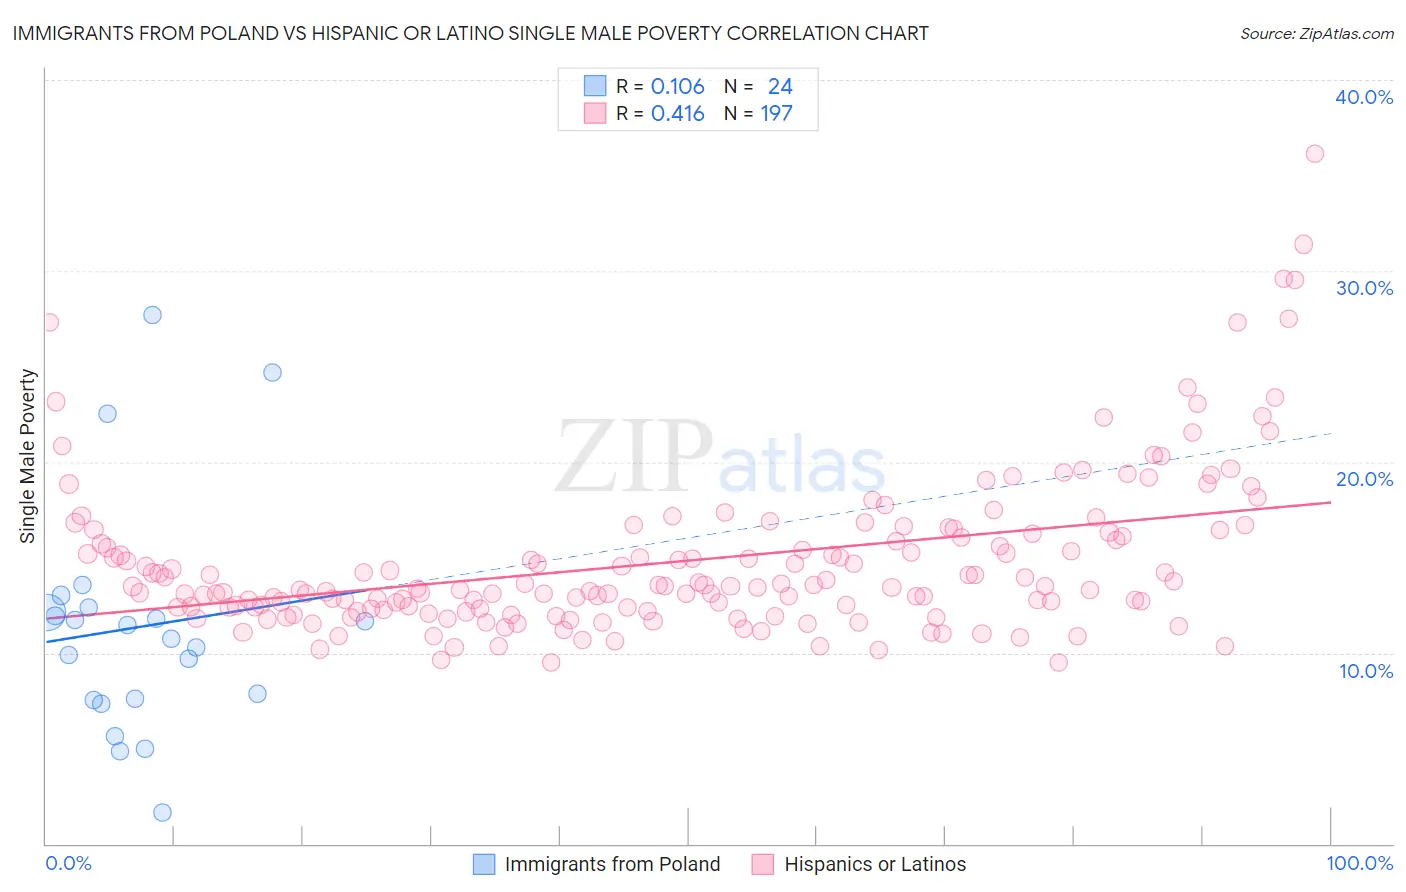 Immigrants from Poland vs Hispanic or Latino Single Male Poverty